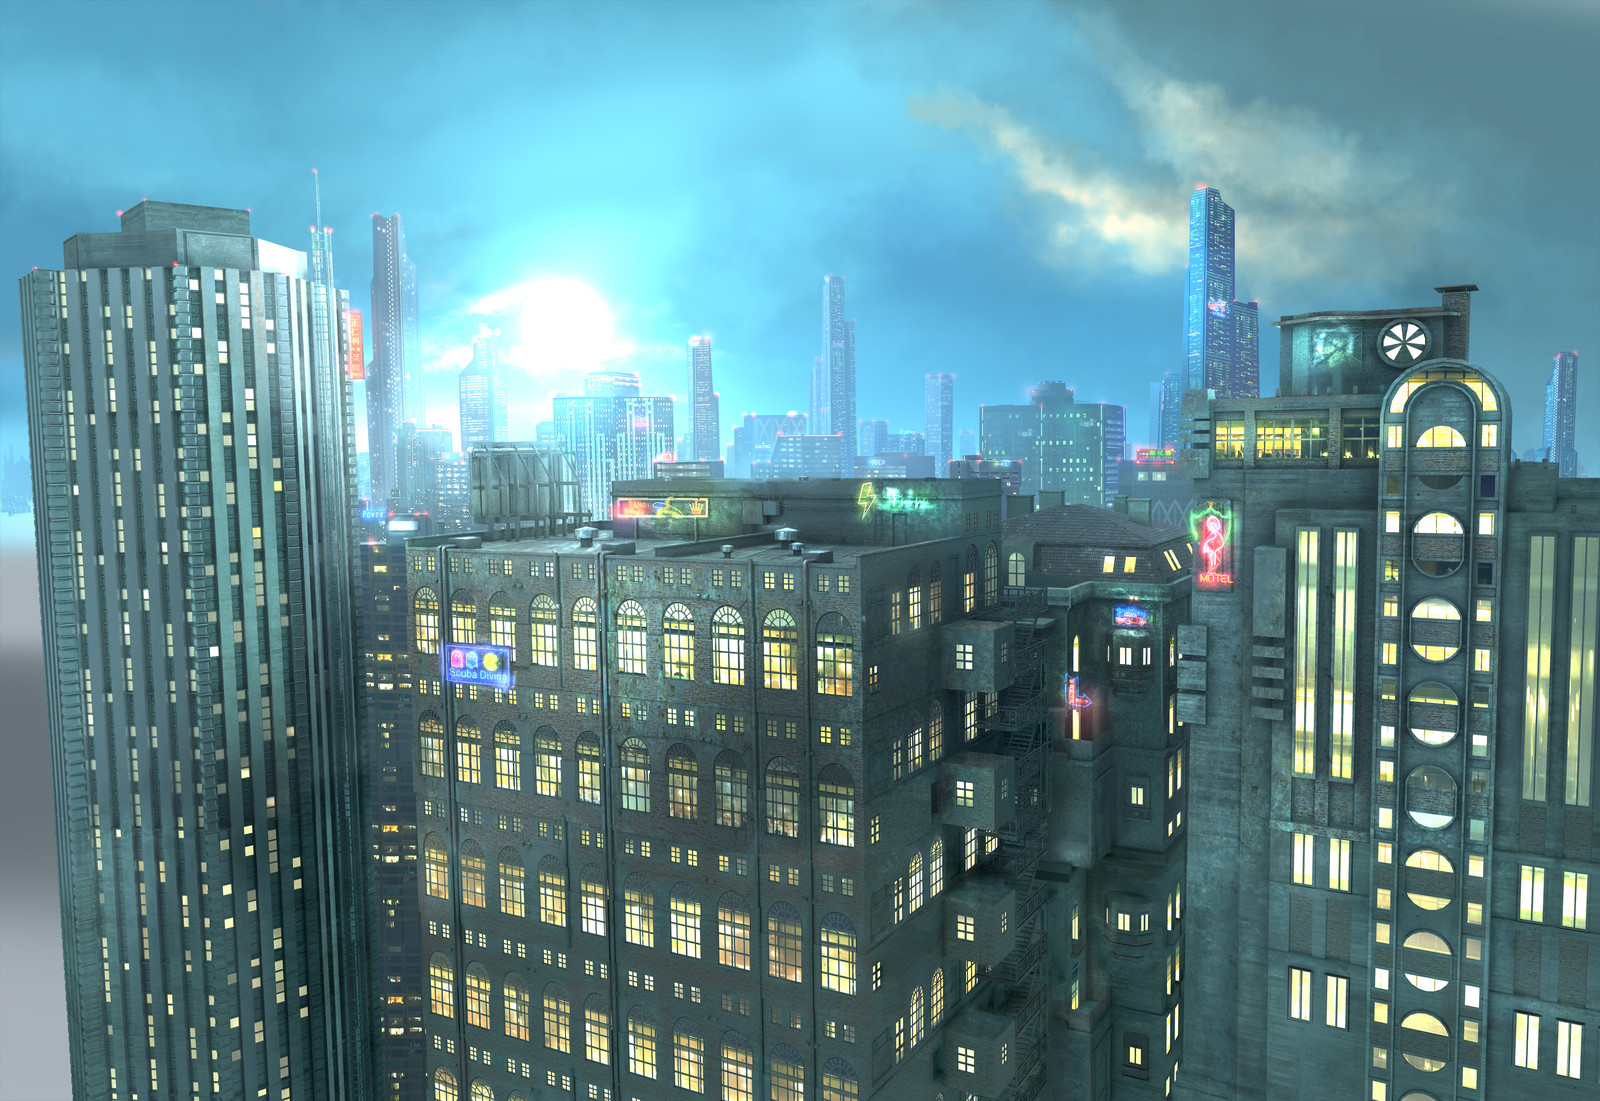 final city backdrop